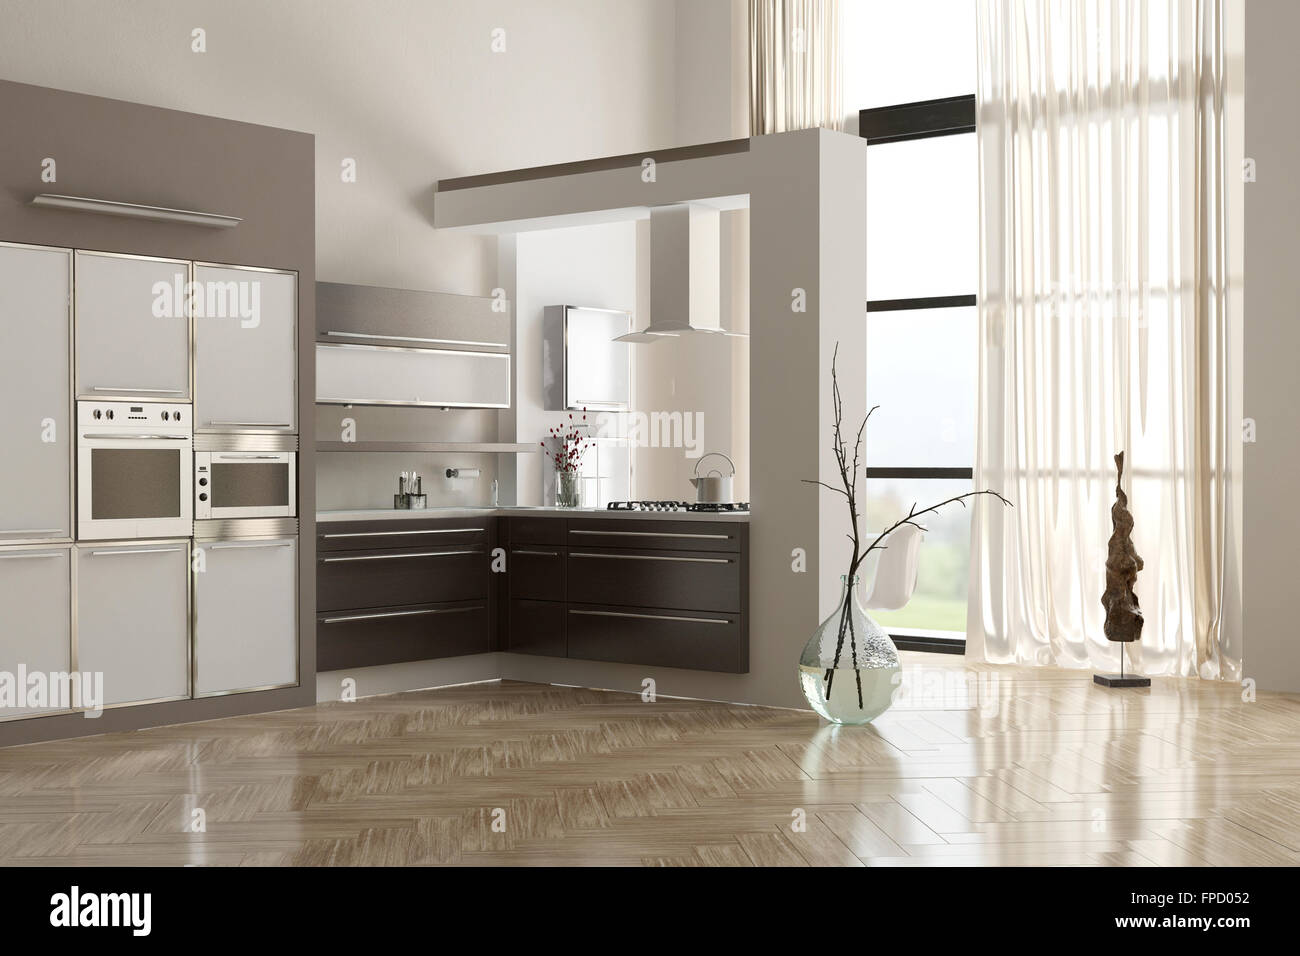 Modern Minimalist Kitchen Interior With Built In Appliances And